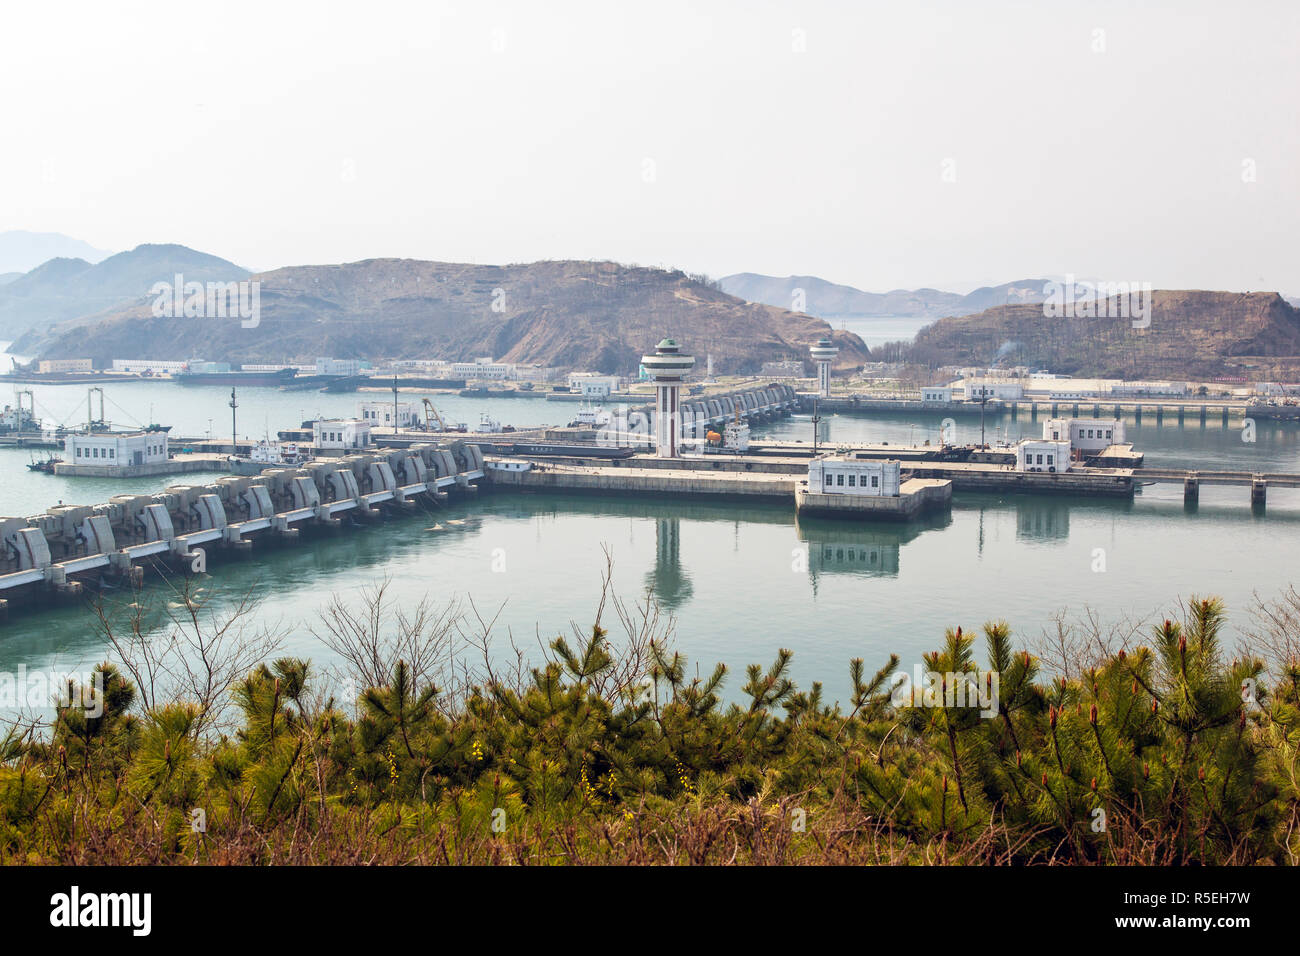 Democratic Peoples's Republic of Korea (DPRK), North Korea, Nampo, West Sea Barrage Stock Photo